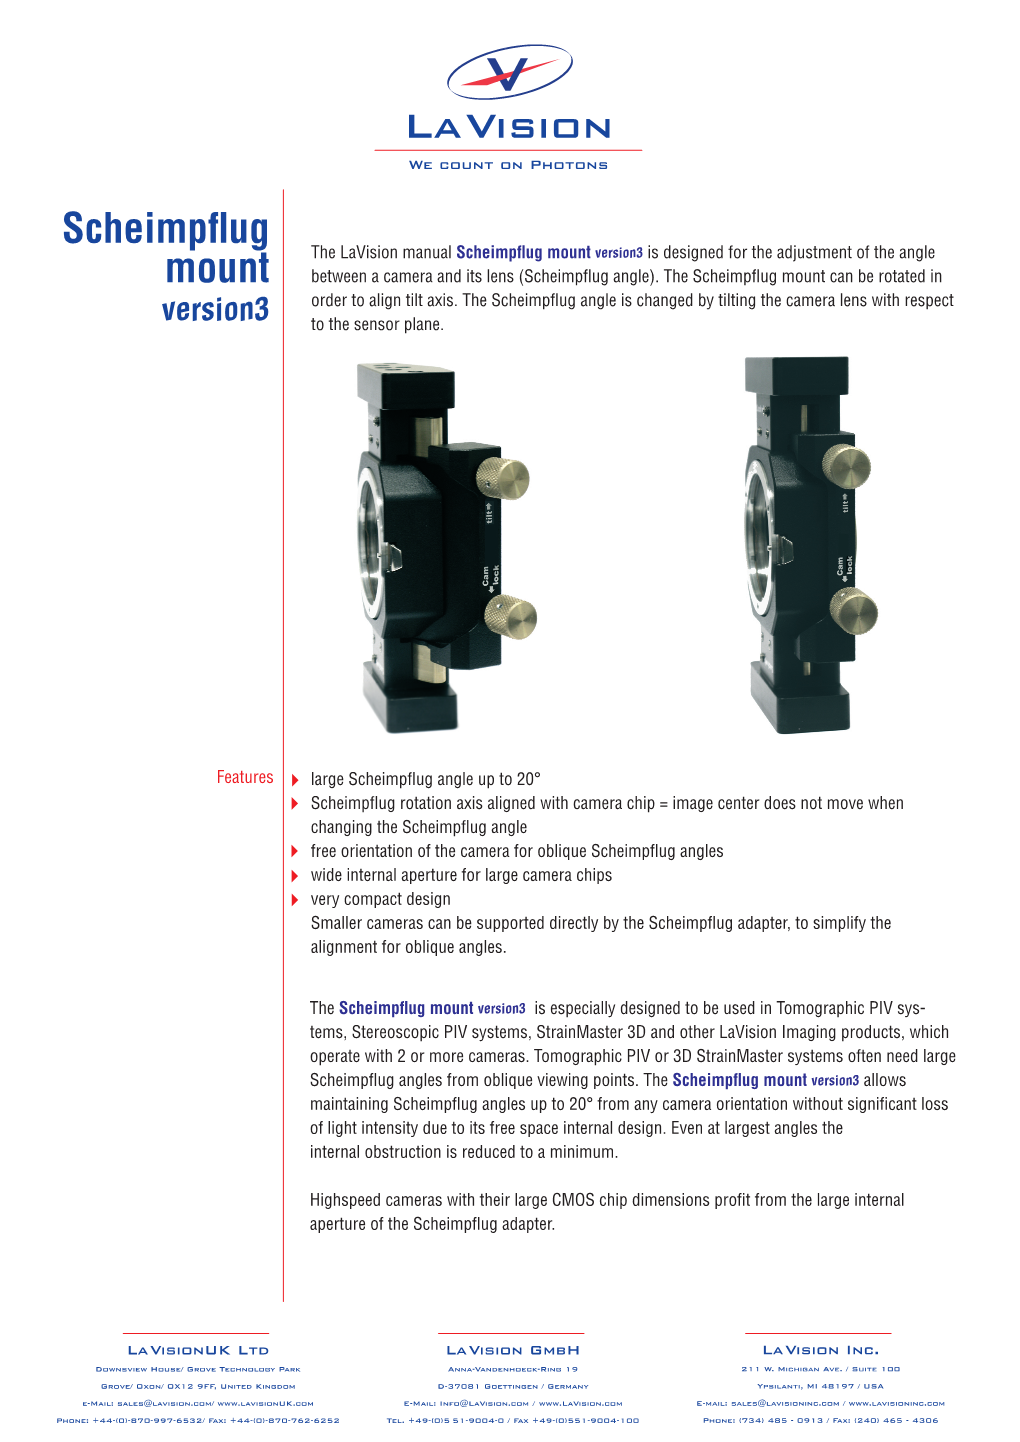 DS Manual Scheimpflug Mountv3.Indd